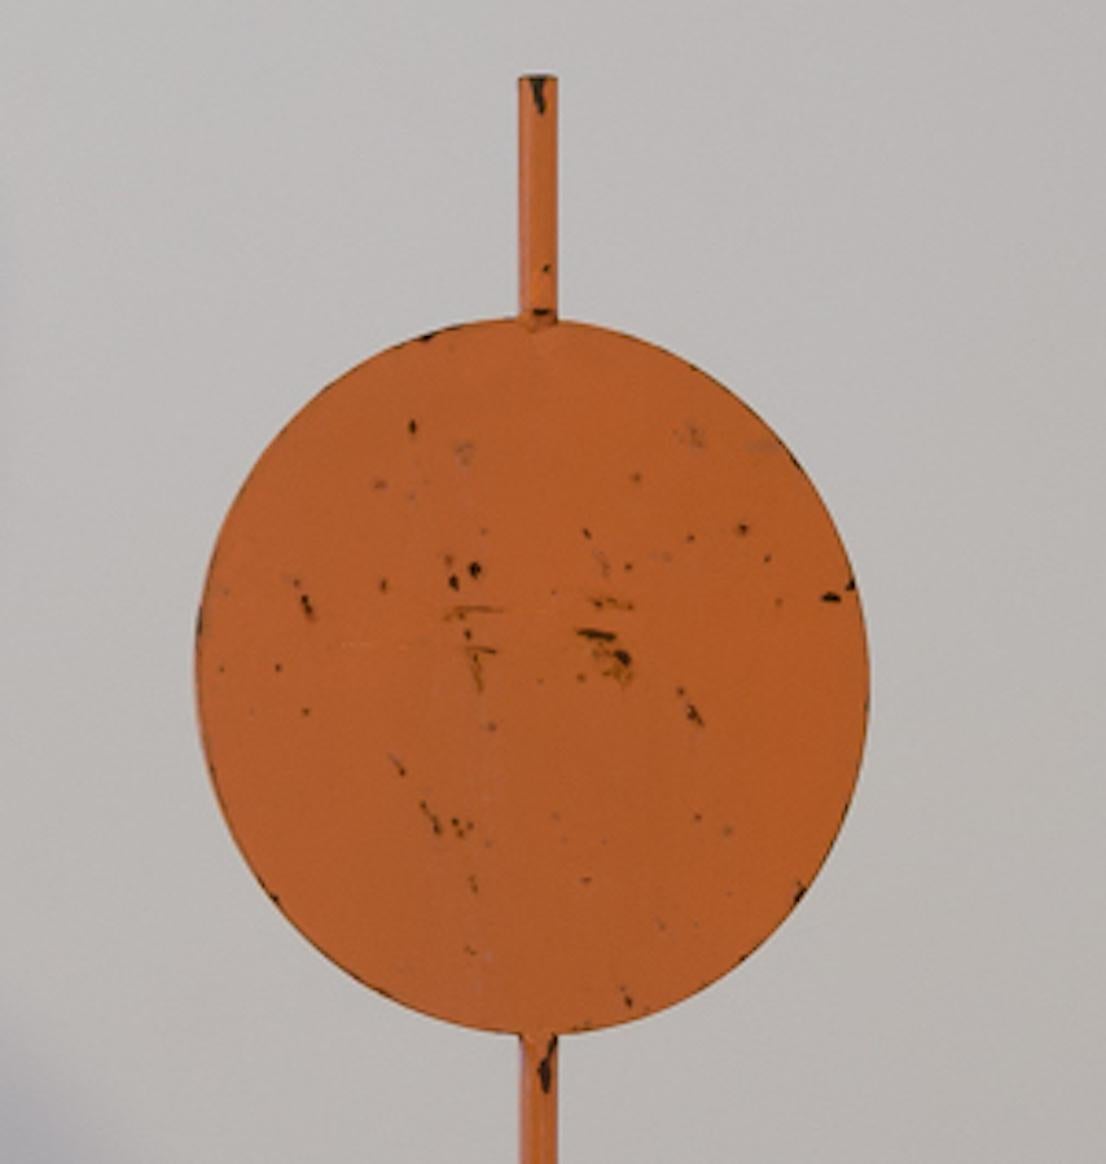 Martin Wöhrl Abstract Sculpture - Pavesi - Contemporary, Sculpture, 21st C., Red, Rust, Outdoor, Circular, Sign